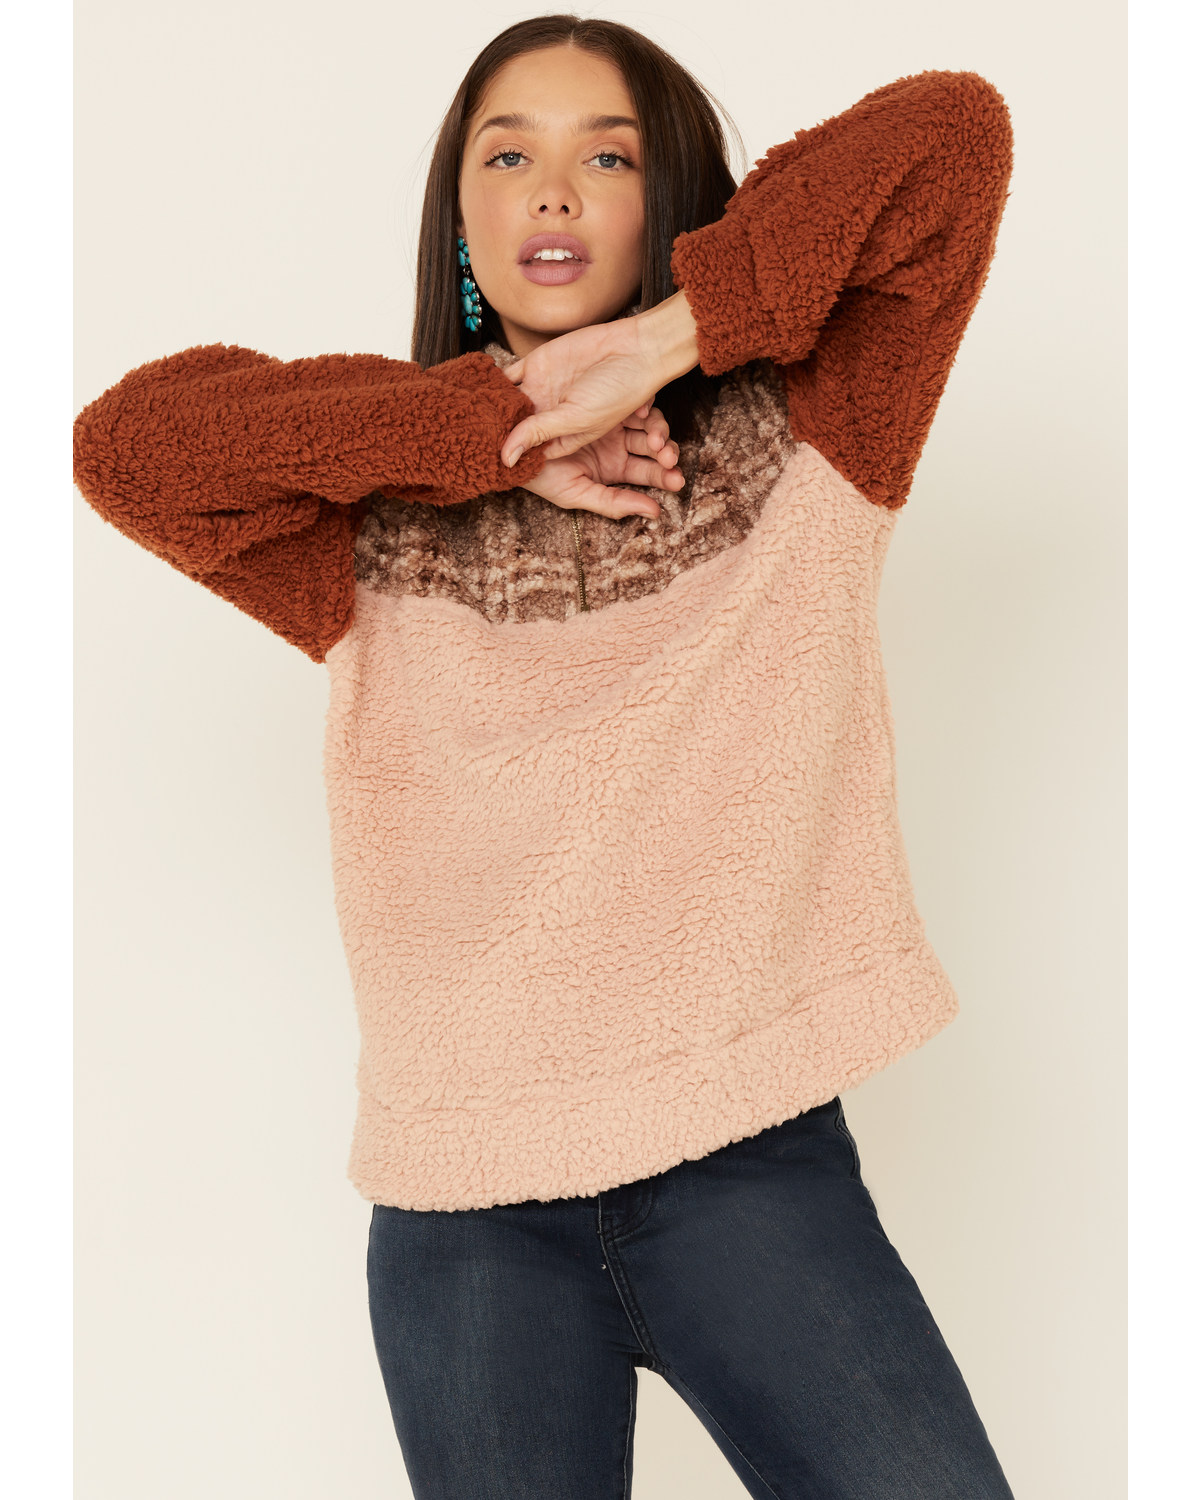 Hem & Thread Women's Plaid Colorblock Sherpa 1/4 Zip Pullover